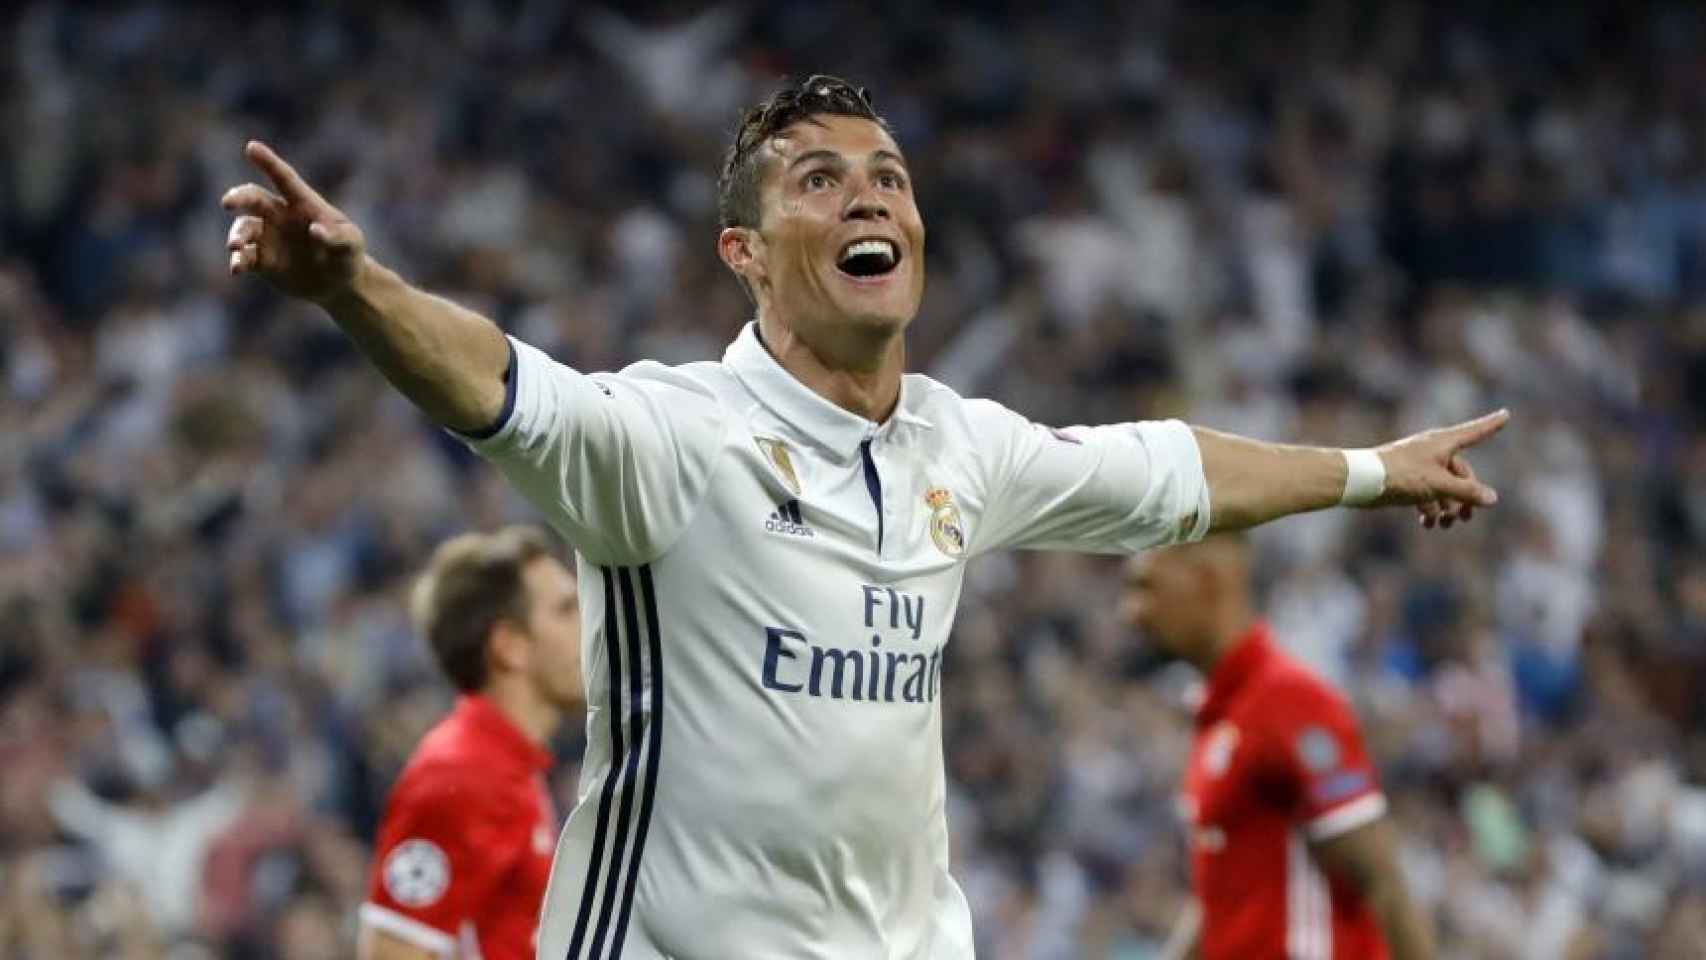 Cristiano Ronaldo celebrando su gol con lo alto de la grada. EFE